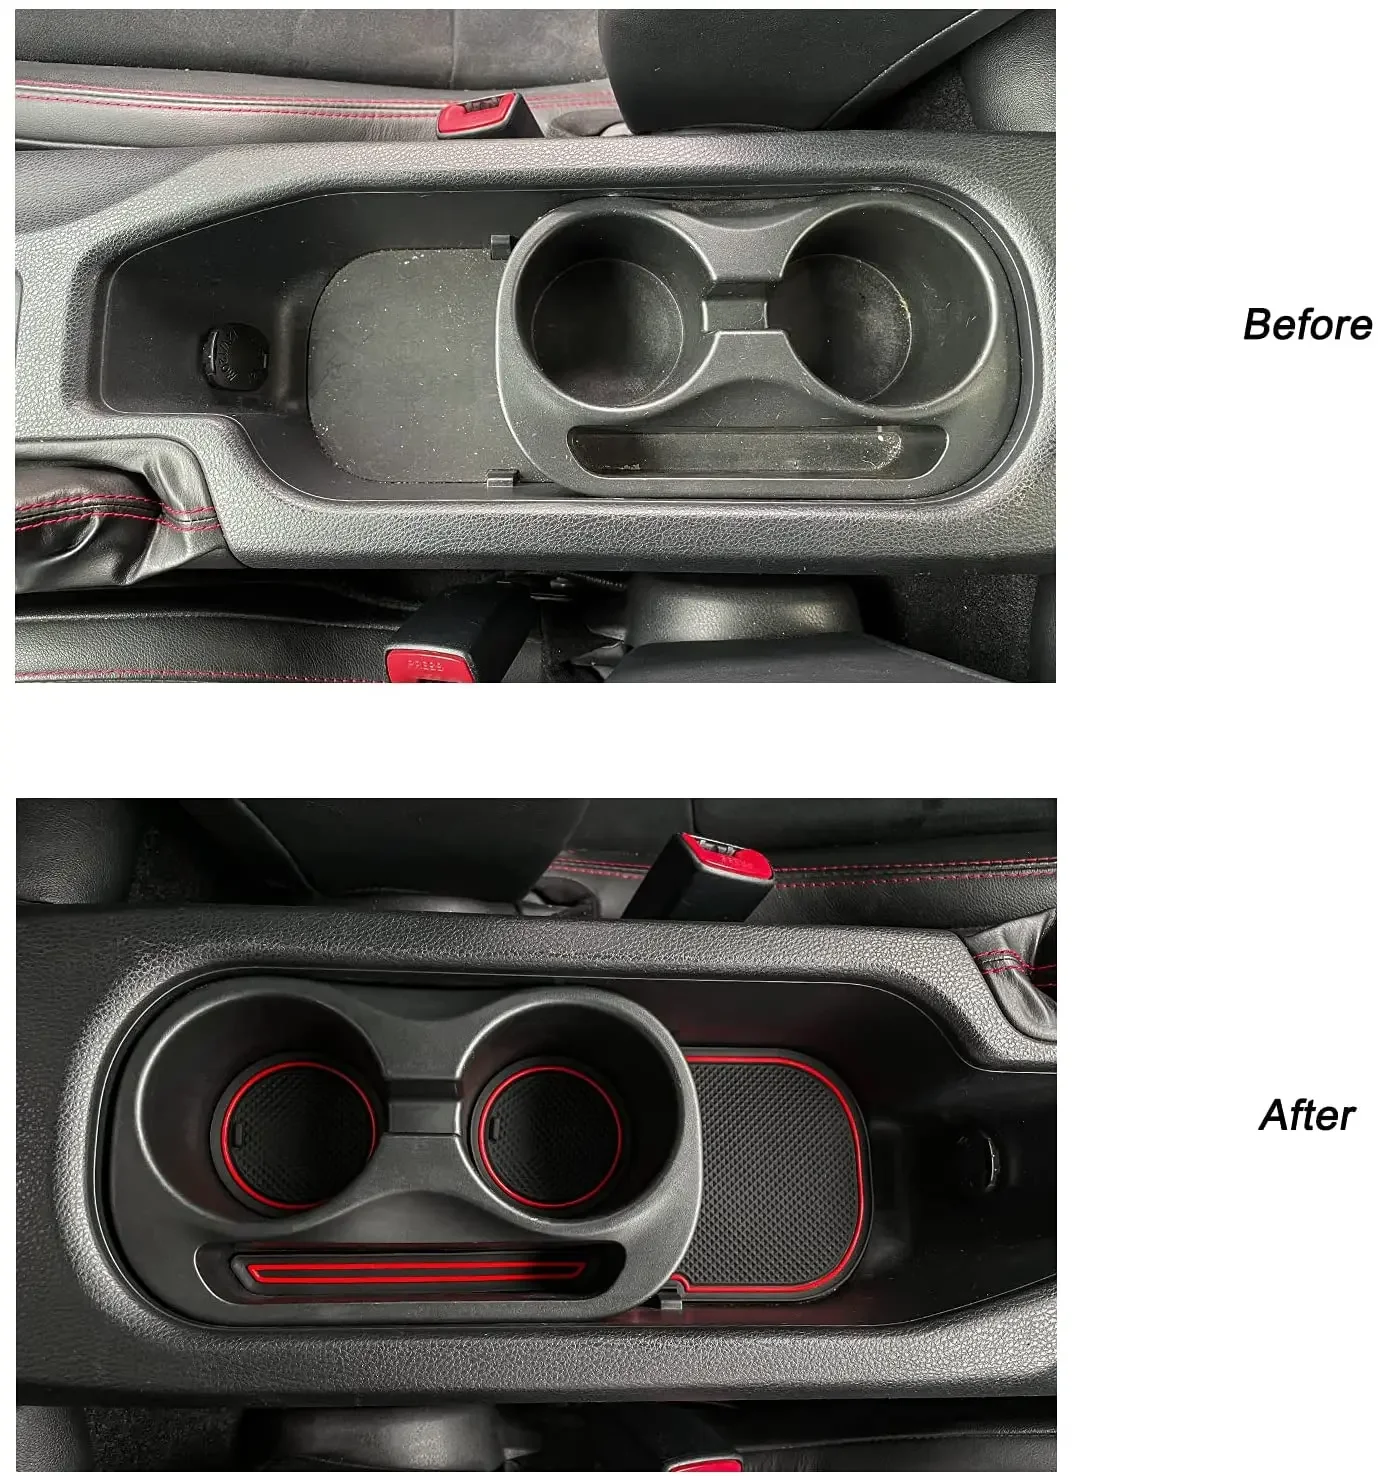 Car Inner Anti-Slip Mat For Suzuki Vitara LHD 2015 2016 2017 2018 2019  Escudo Gate Slot Coaster Anti-Dirty Door Groove Mat Car Styling Sticker